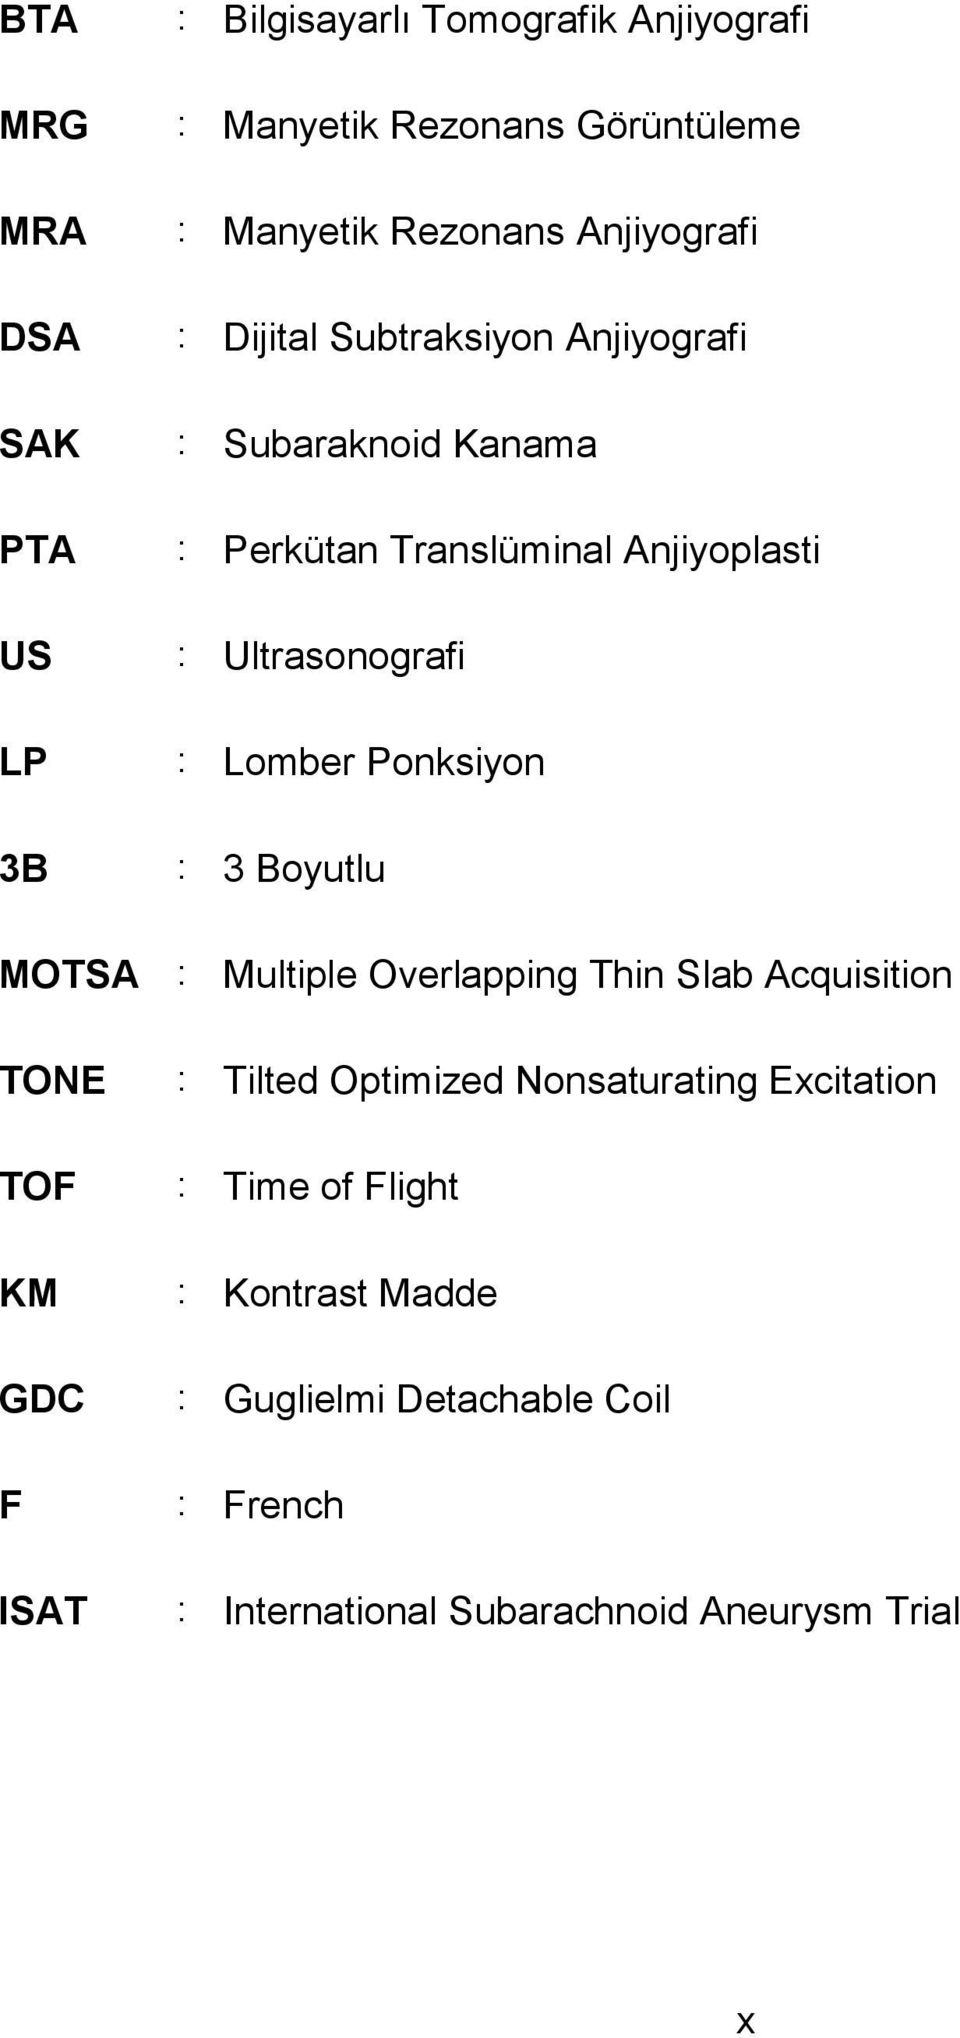 Lomber Ponksiyon : 3 Boyutlu MOTSA : Multiple Overlapping Thin Slab Acquisition TONE TOF KM GDC F ISAT : Tilted Optimized